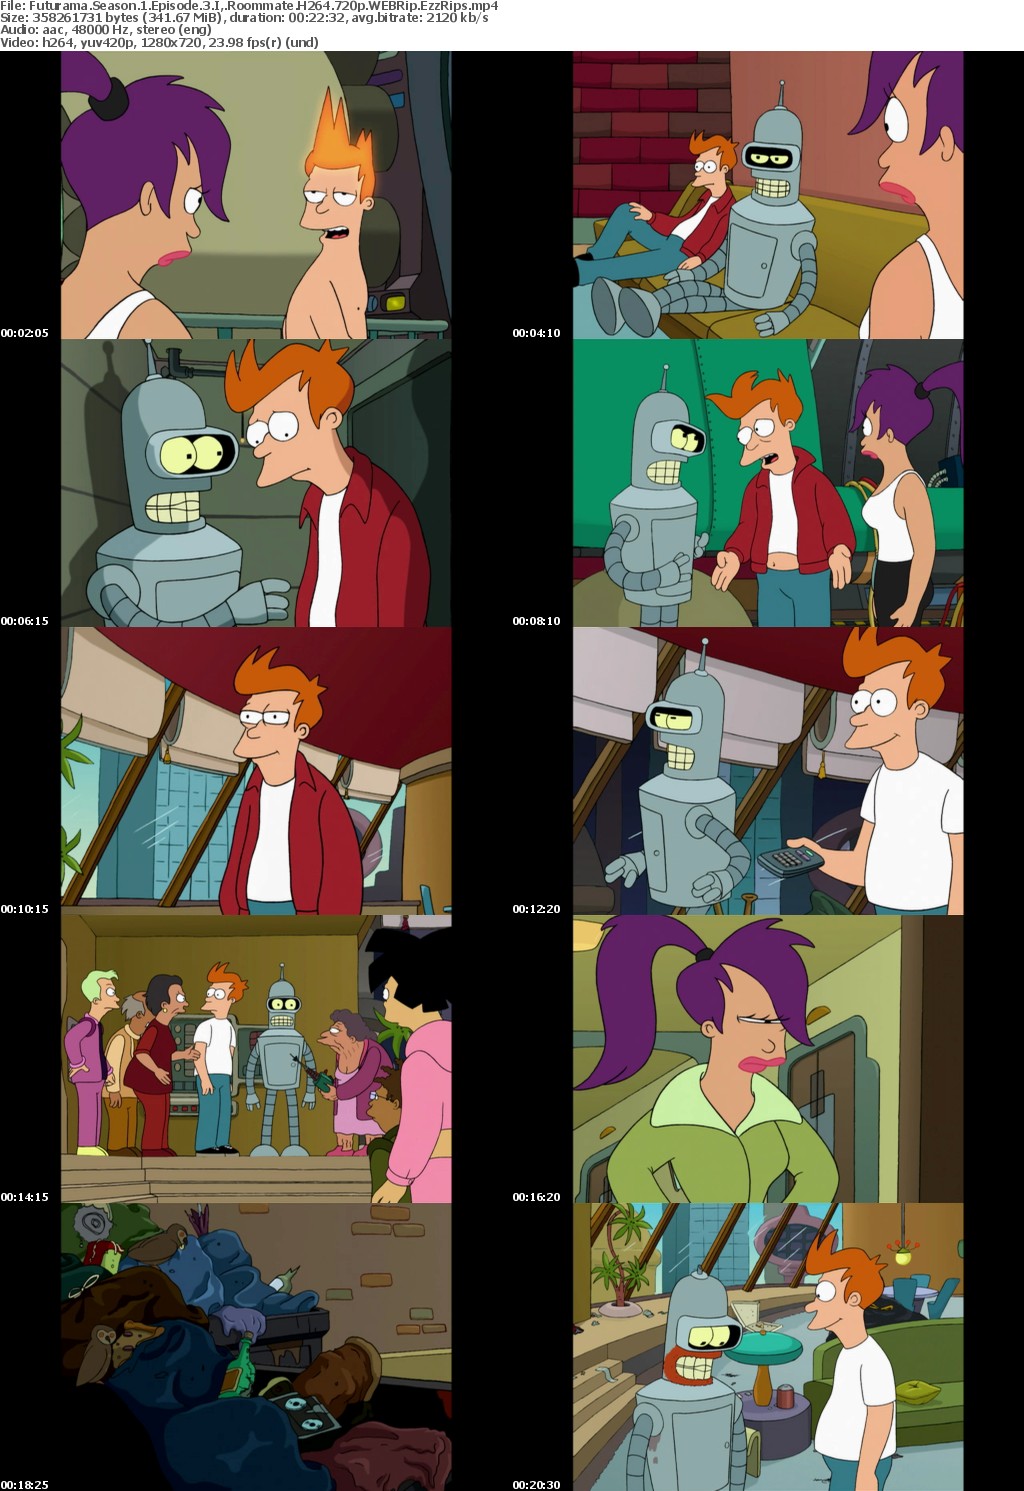 Futurama Season 1 Episode 3 I, Roommate H264 720p WEBRip EzzRips